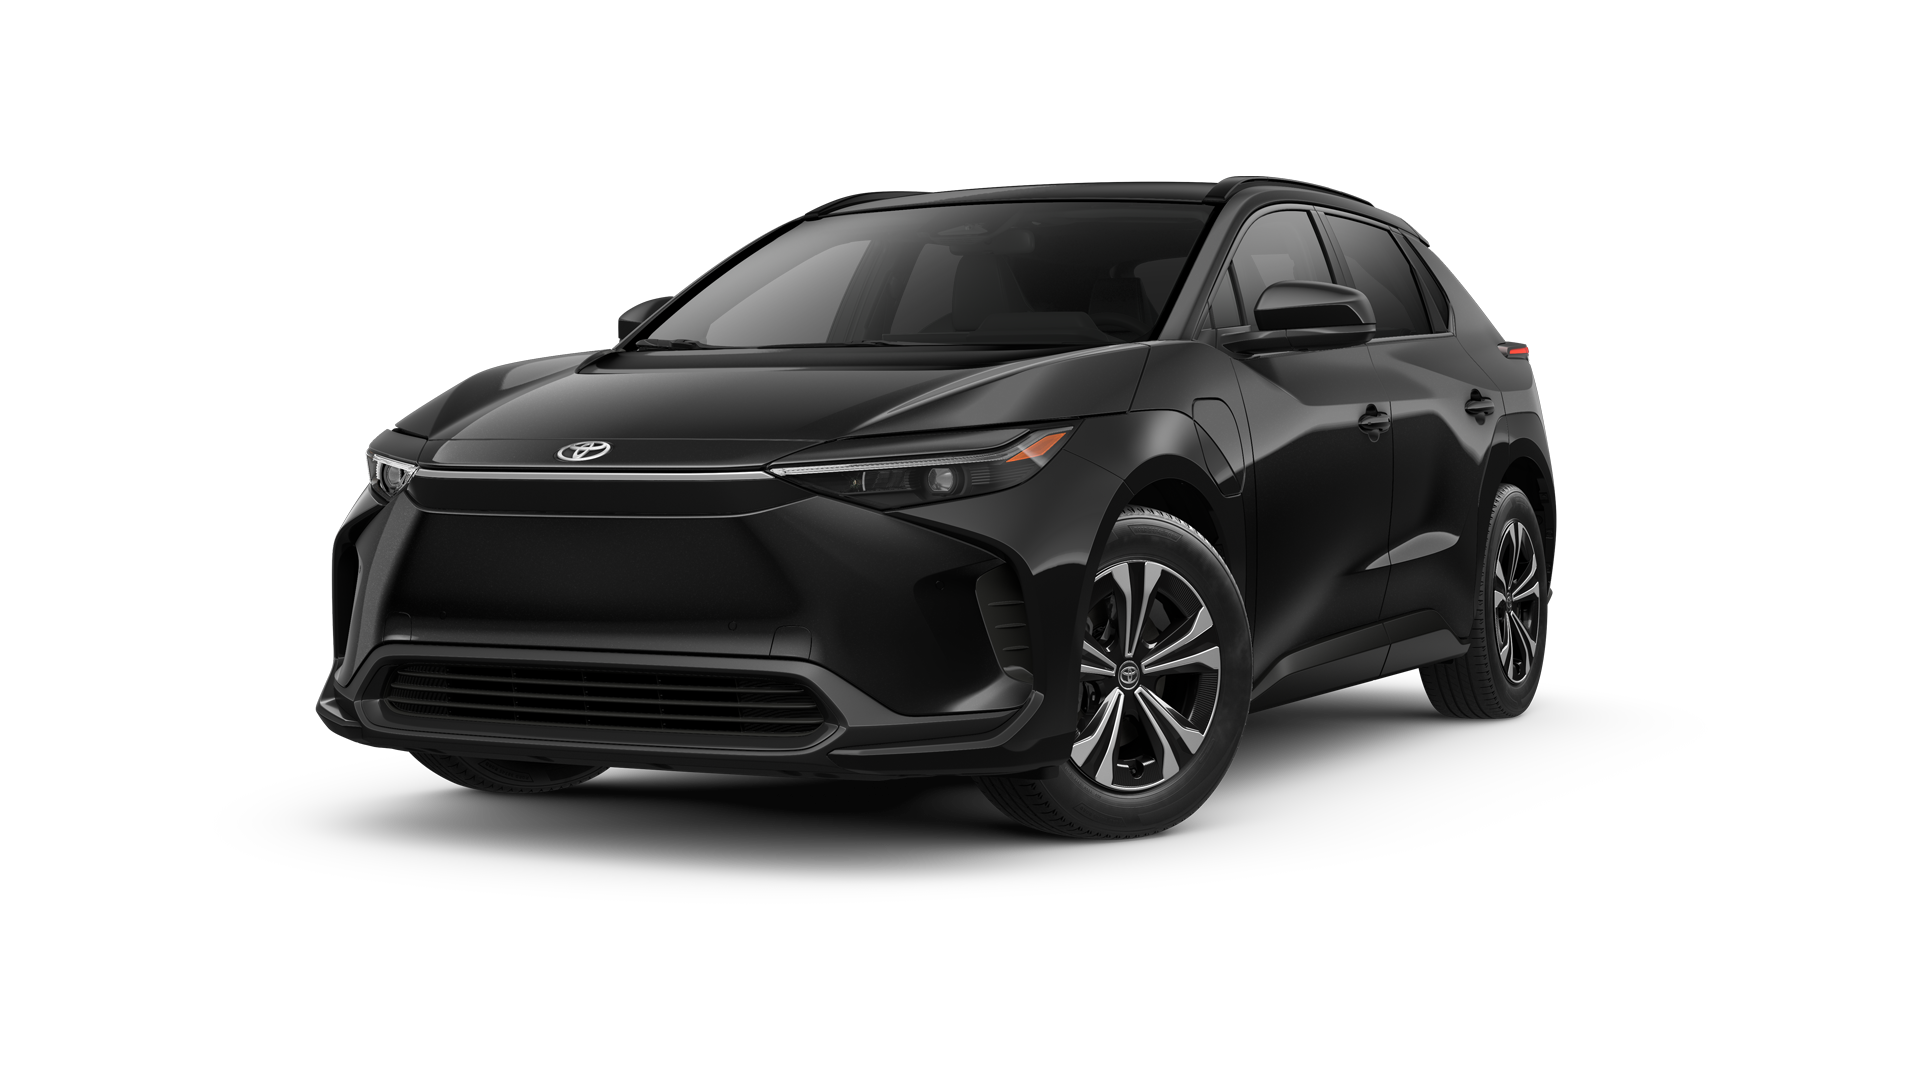 2023 Toyota bZ4X in Black.